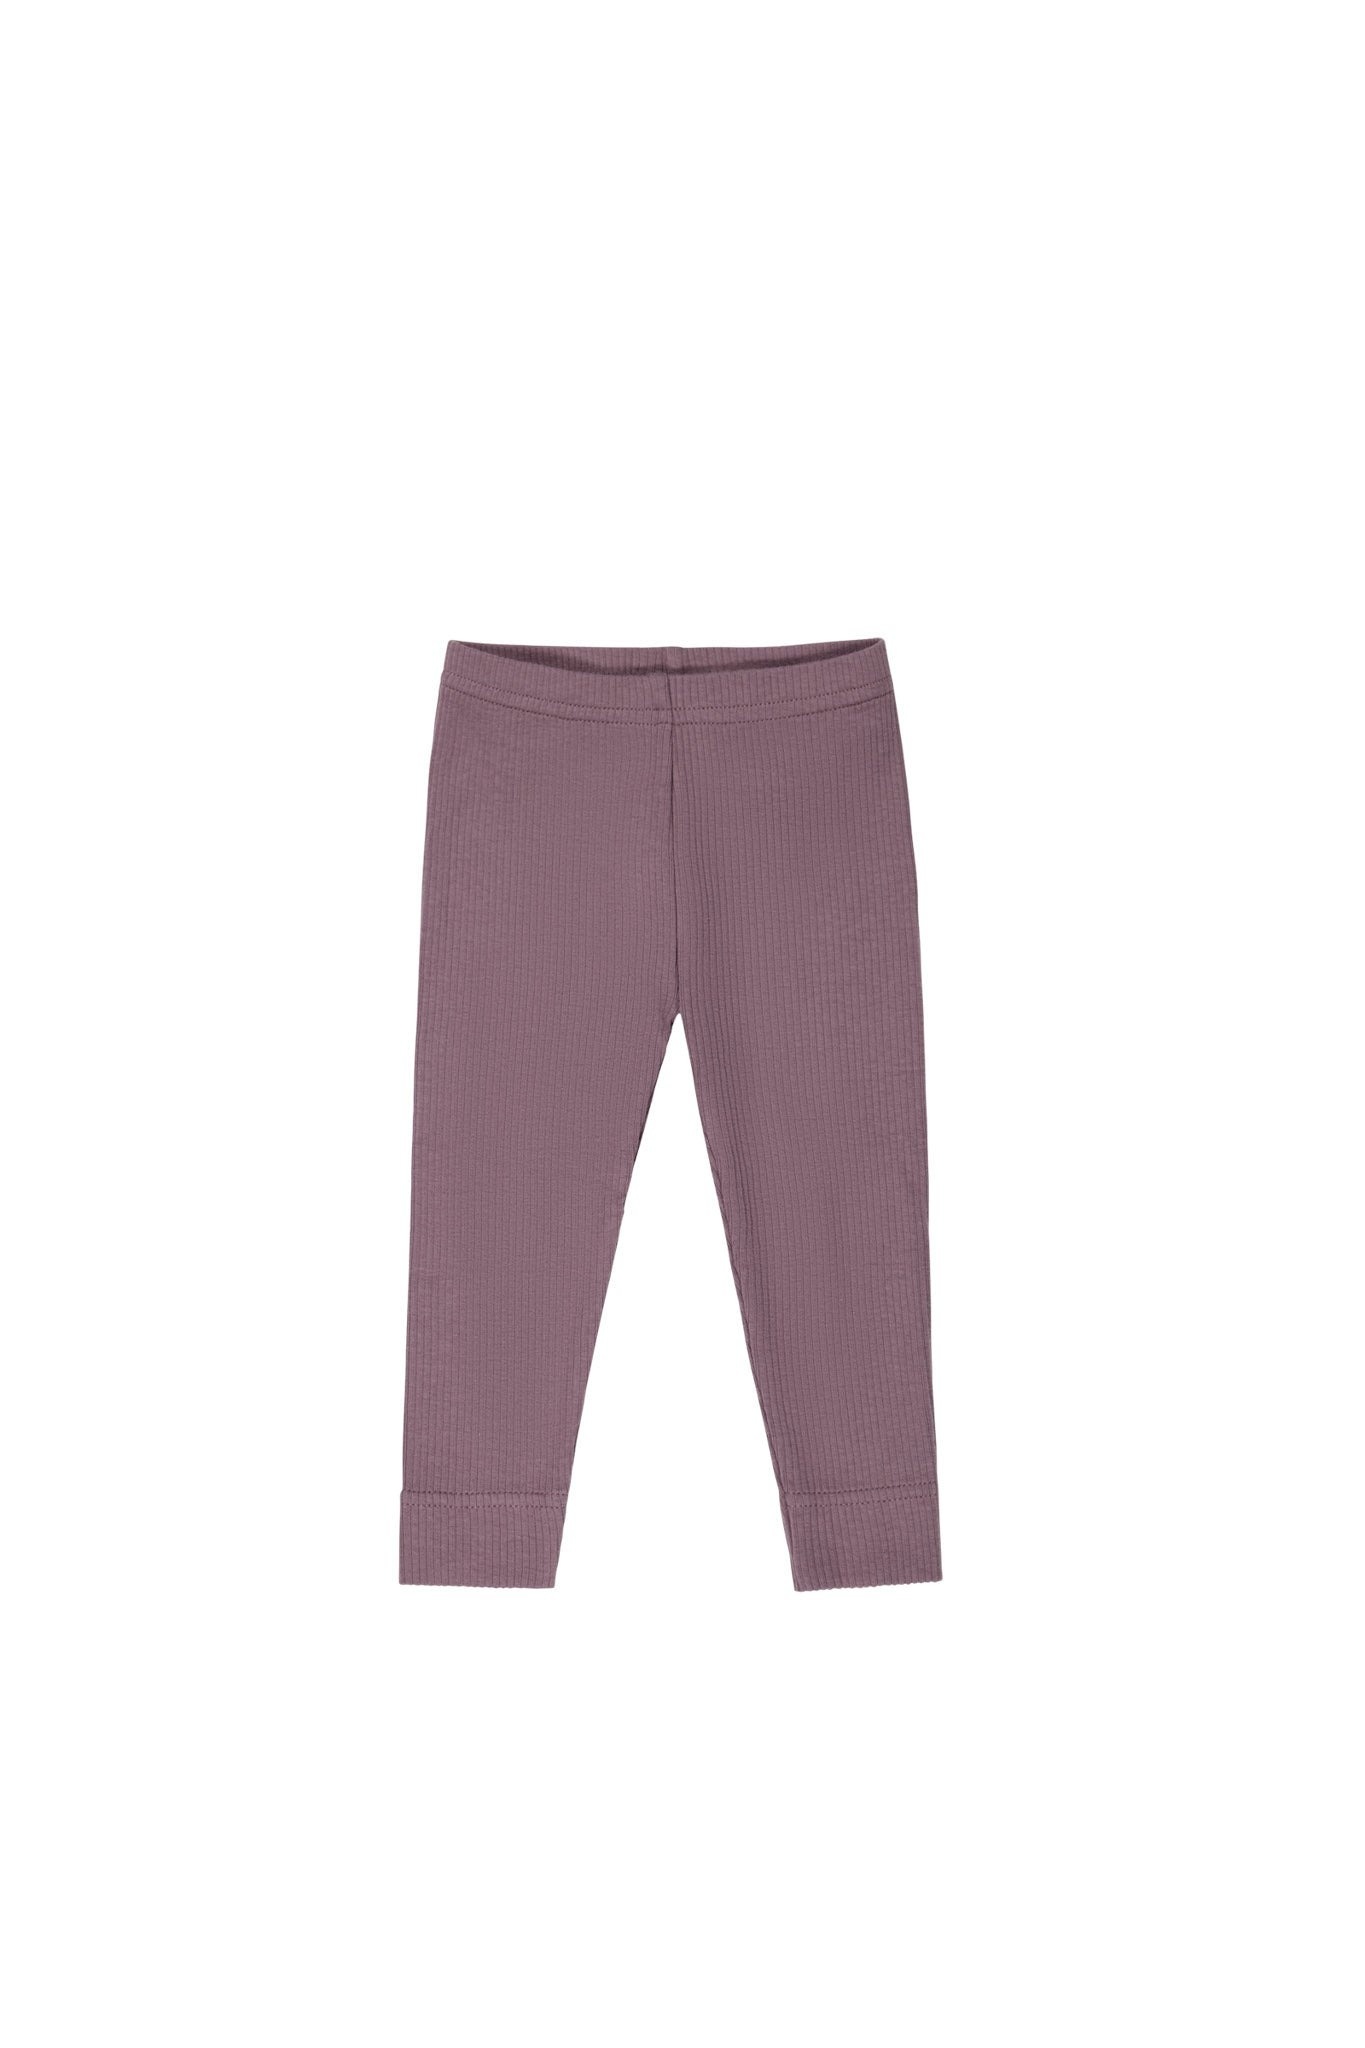 https://cdn.shoplightspeed.com/shops/606915/files/61542685/jamie-kay-organic-cotton-modal-everyday-leggings-b.jpg